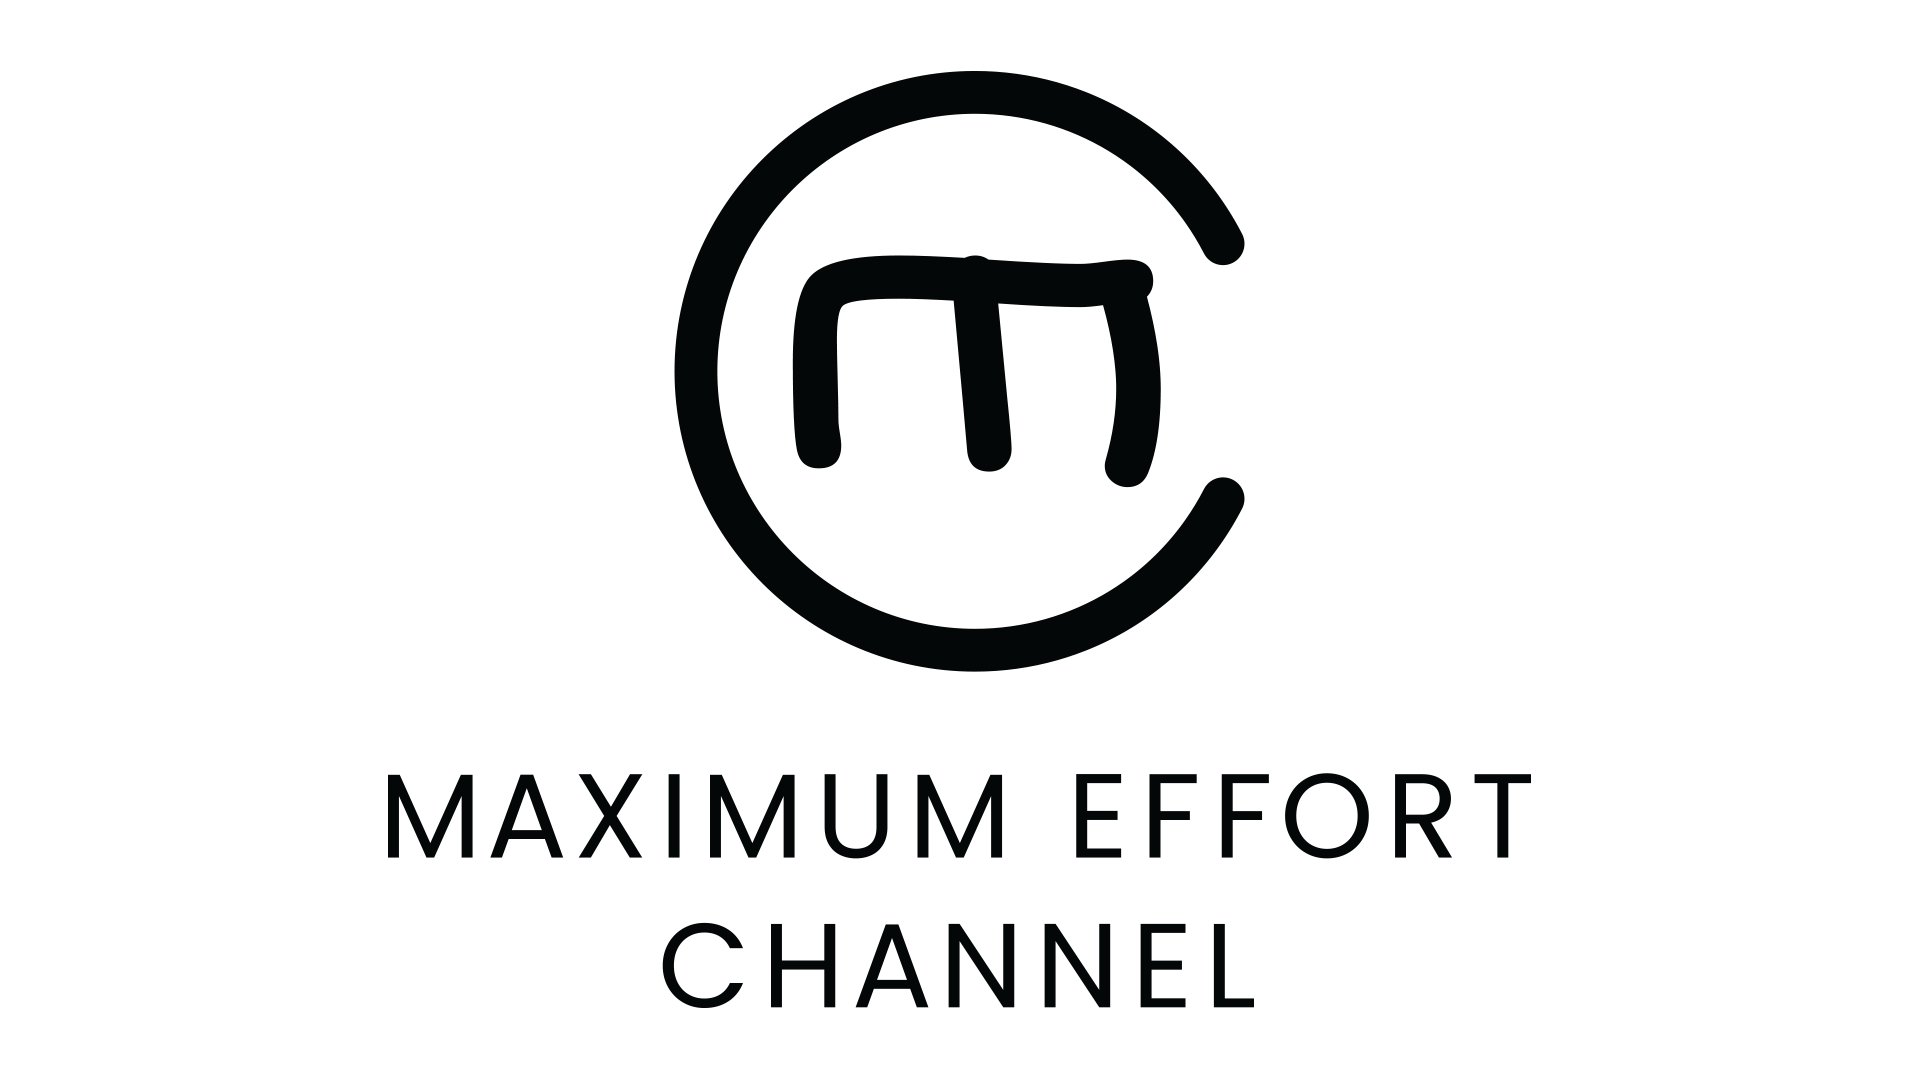 Maximum Effort channel